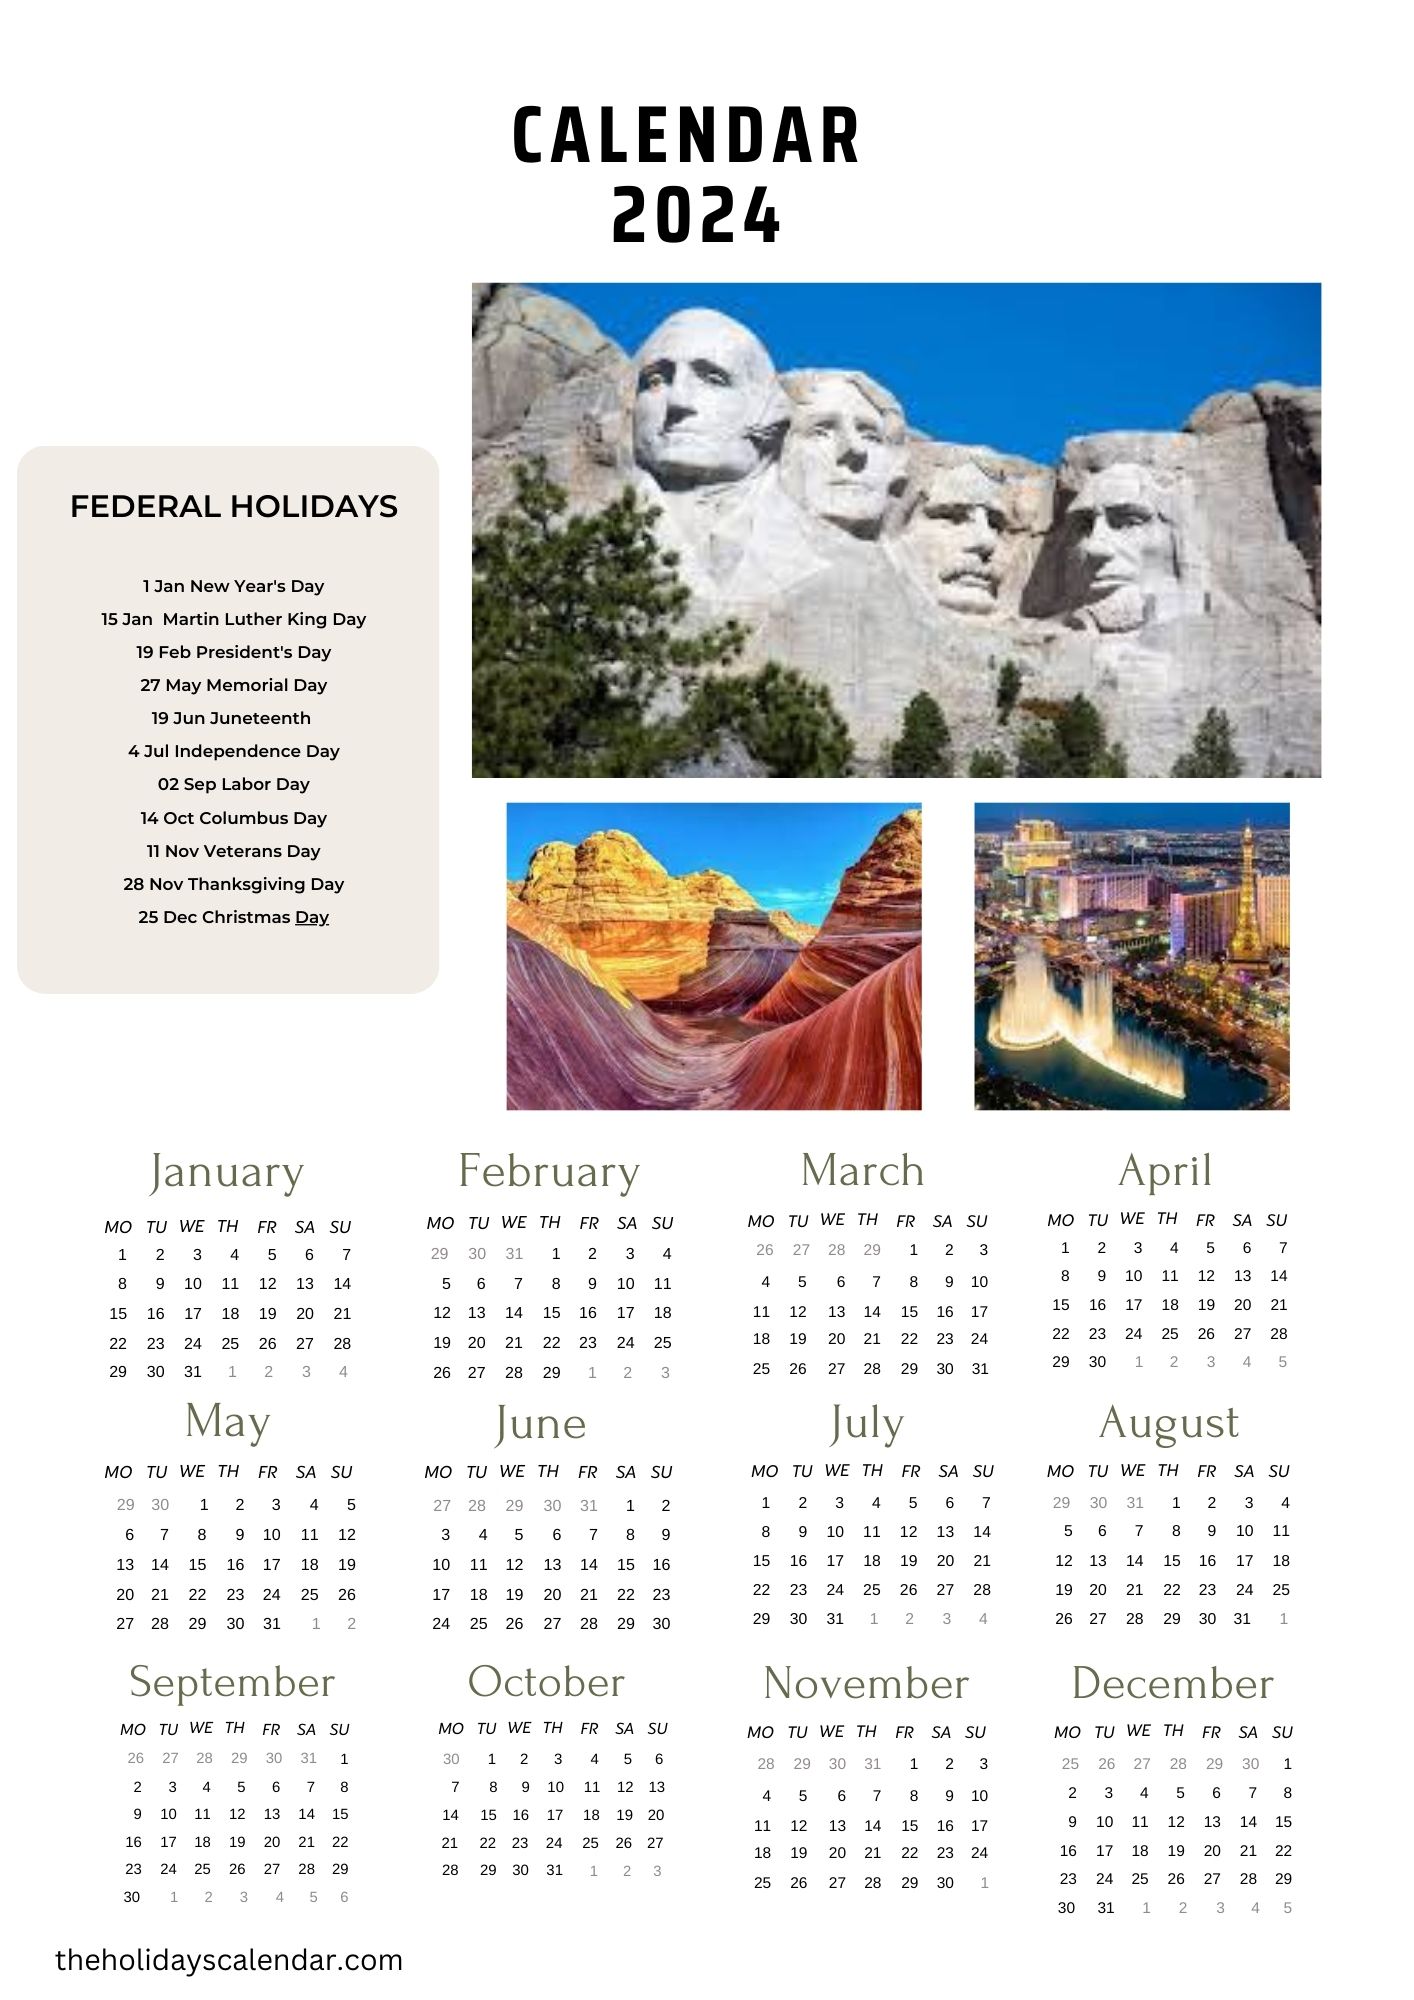 Federal Holidays 2024 with Year Calendar in PDF